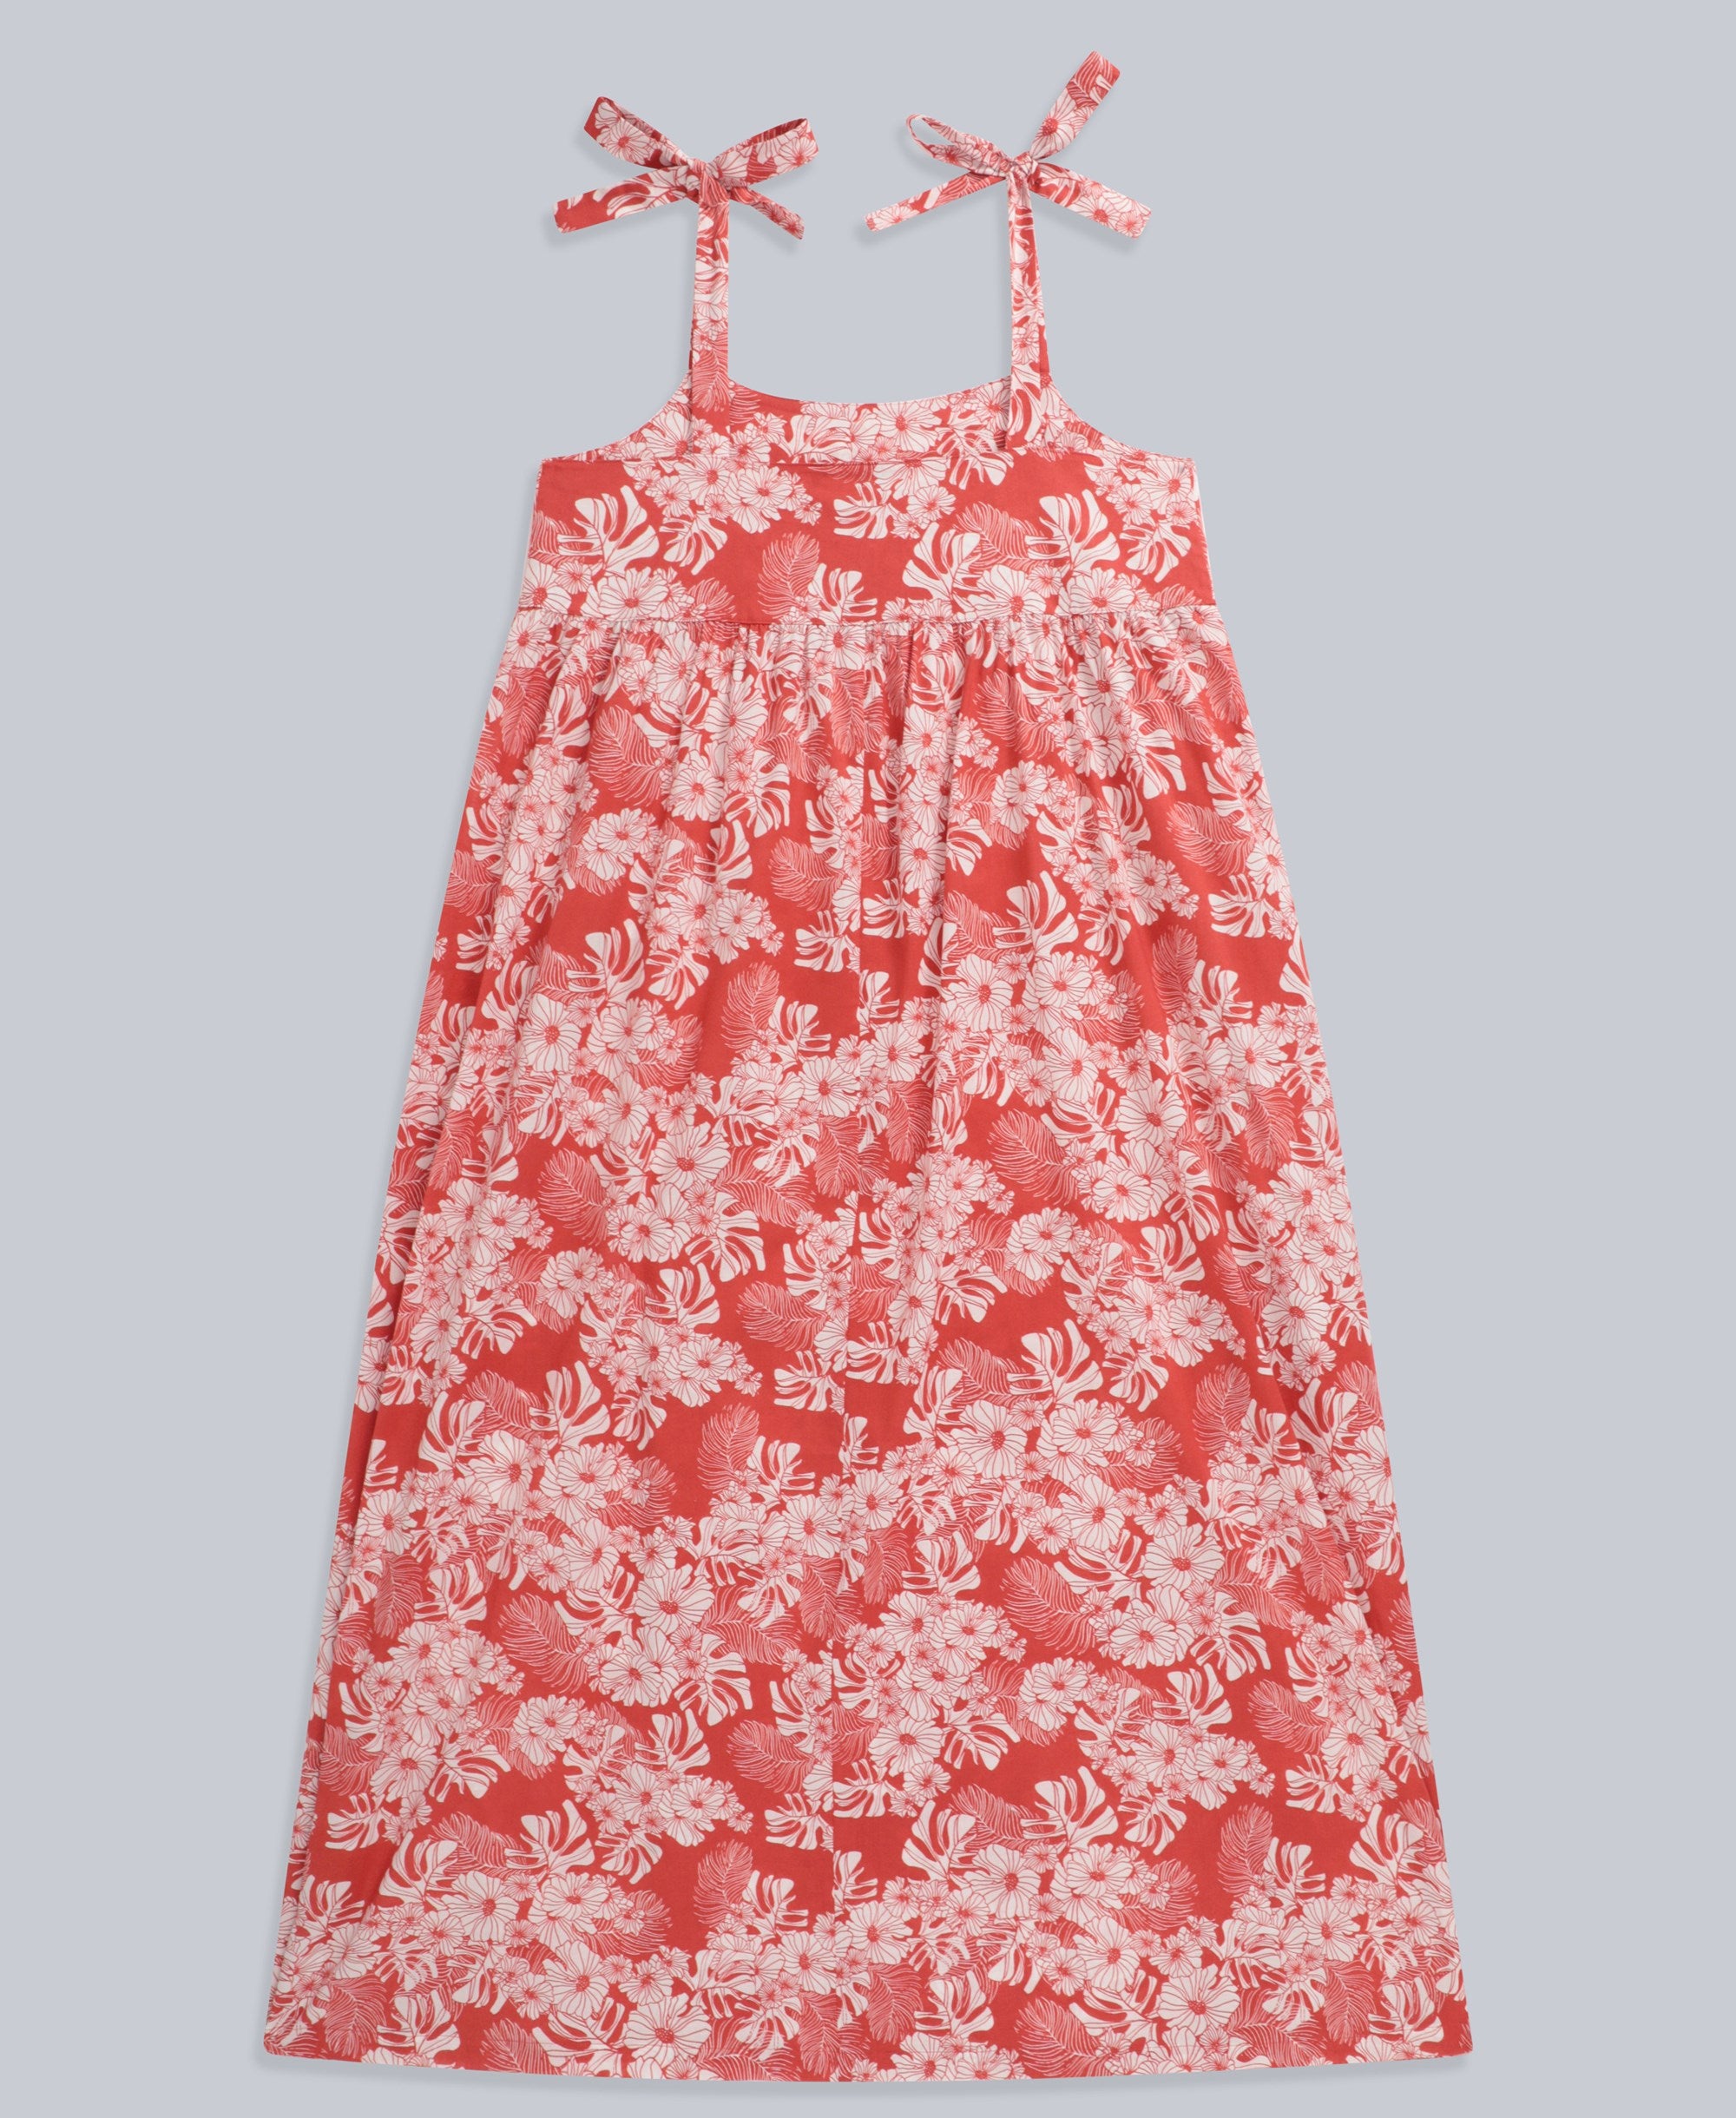 Annabel Organic Womens Maxi Dress - Red